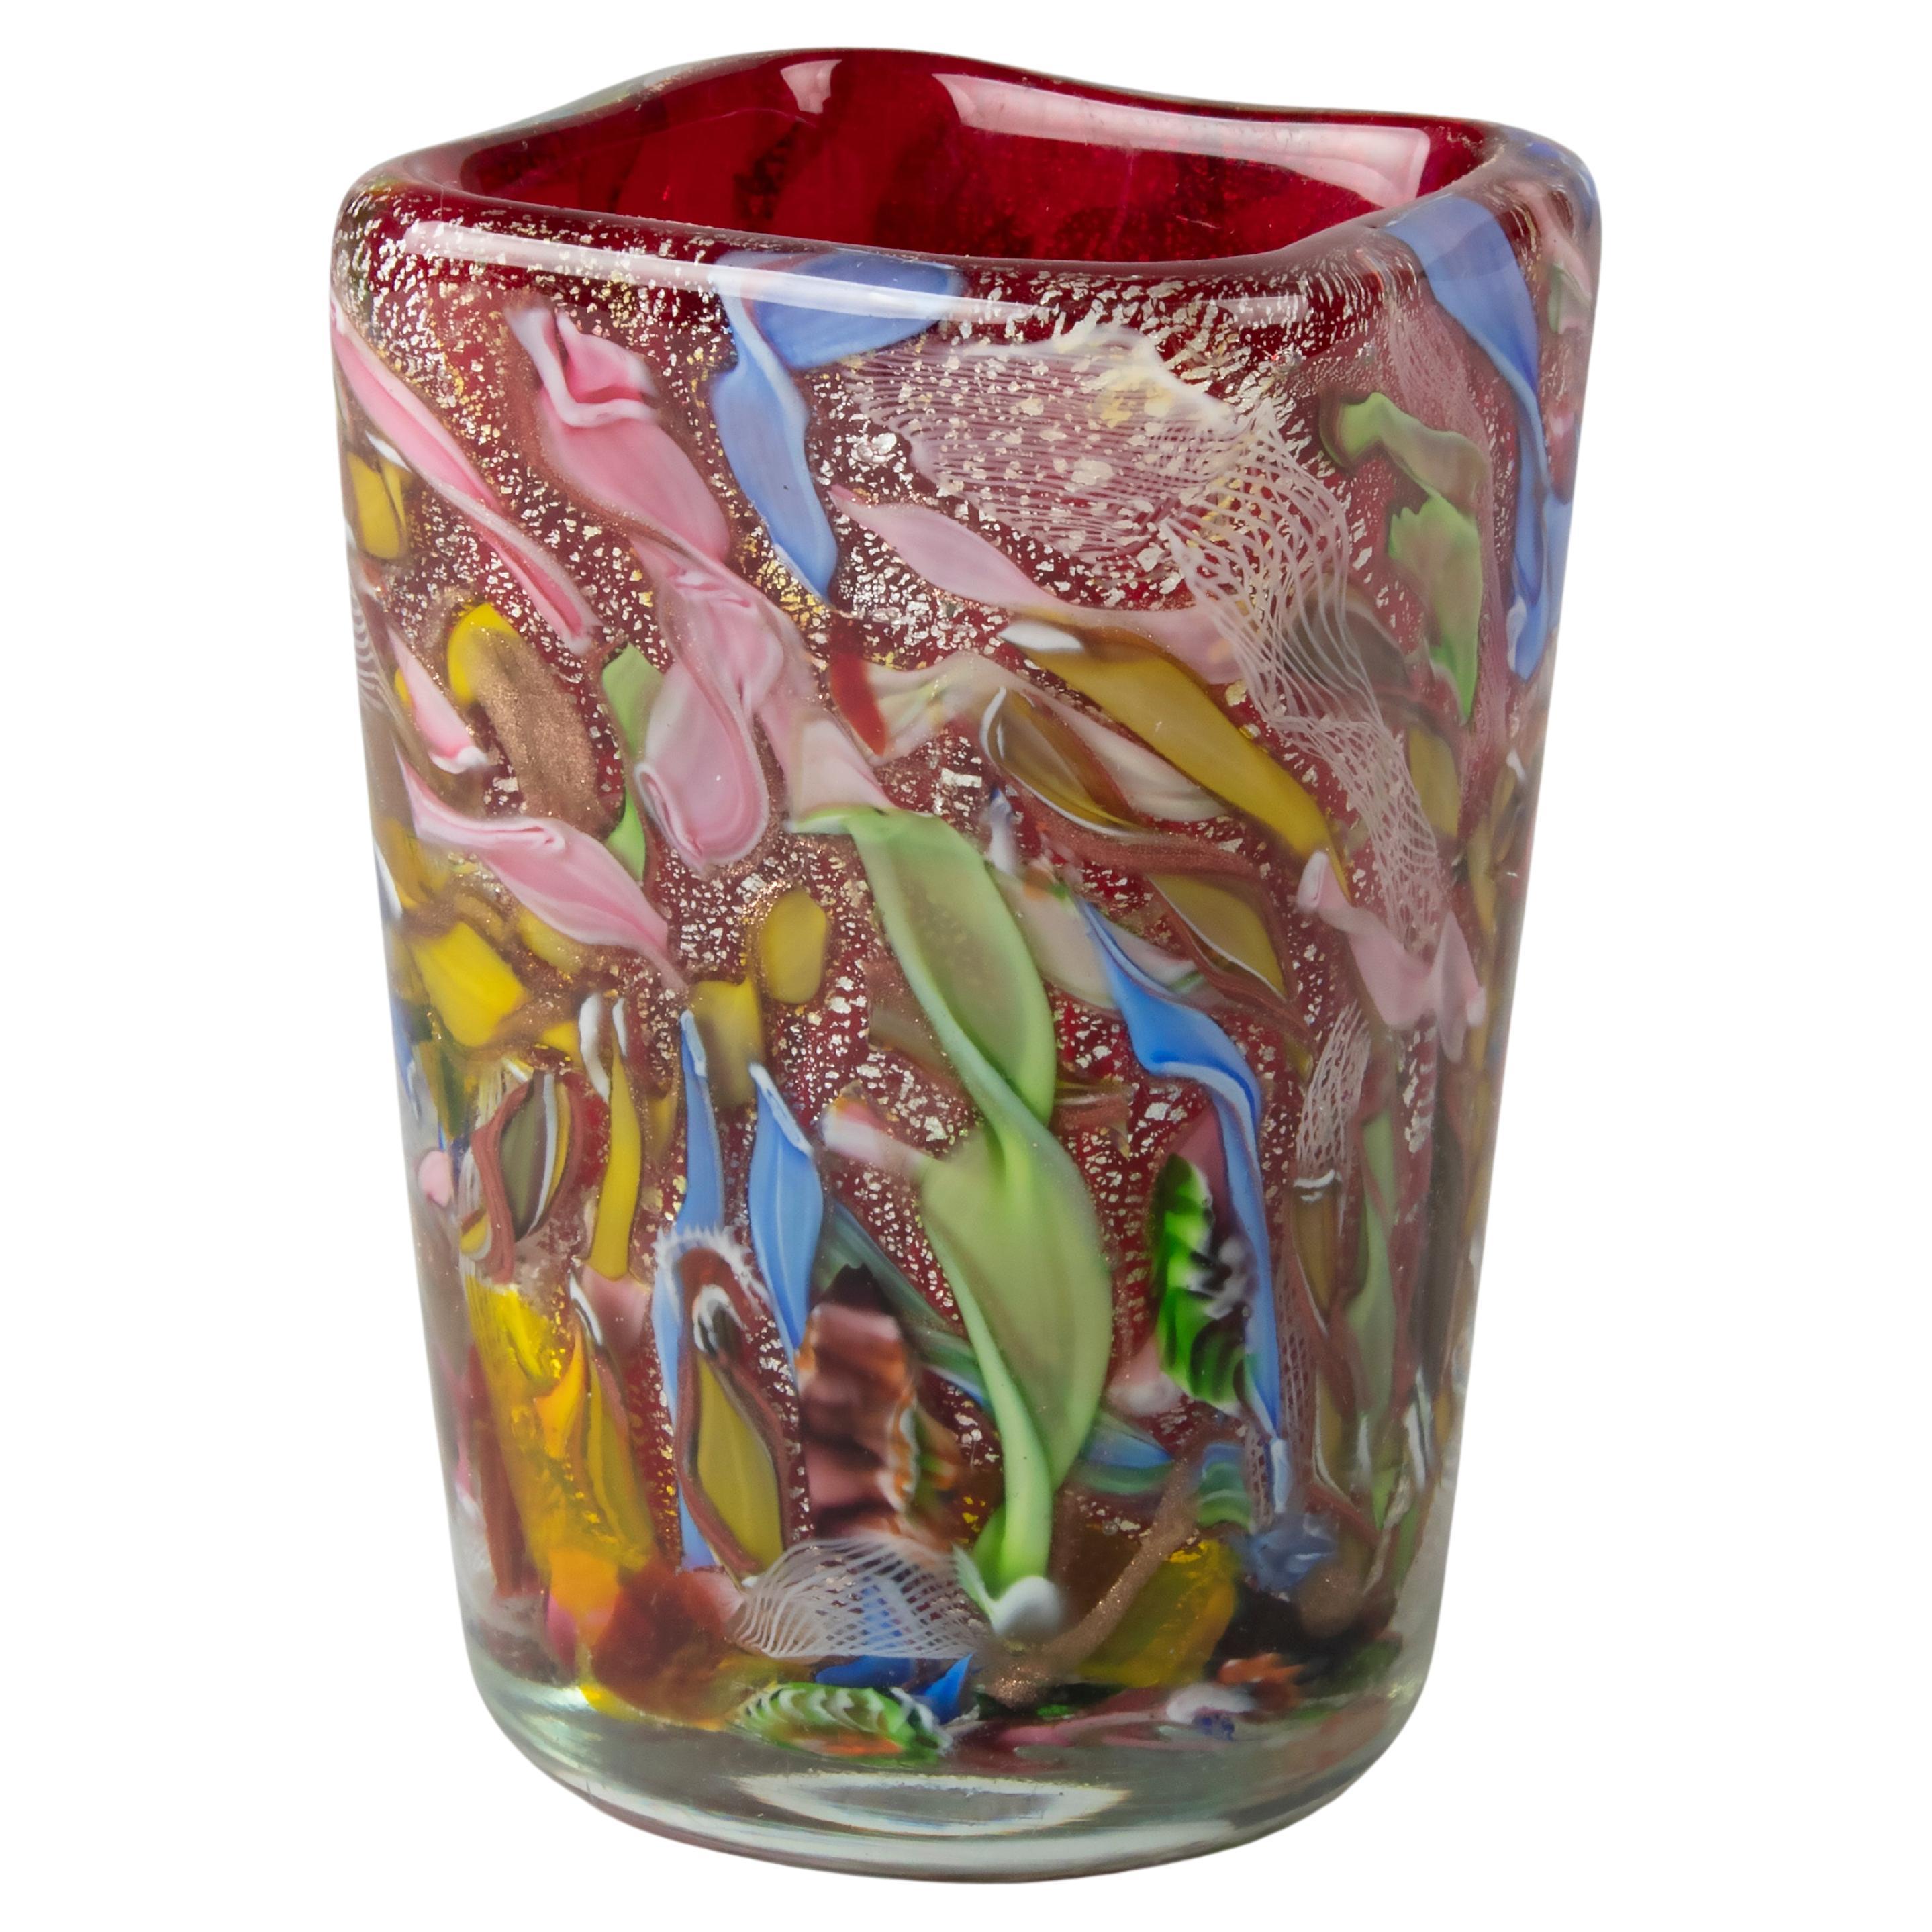 Mid-Century Modern Murano Art Glass Vase attr. to A.Ve.M